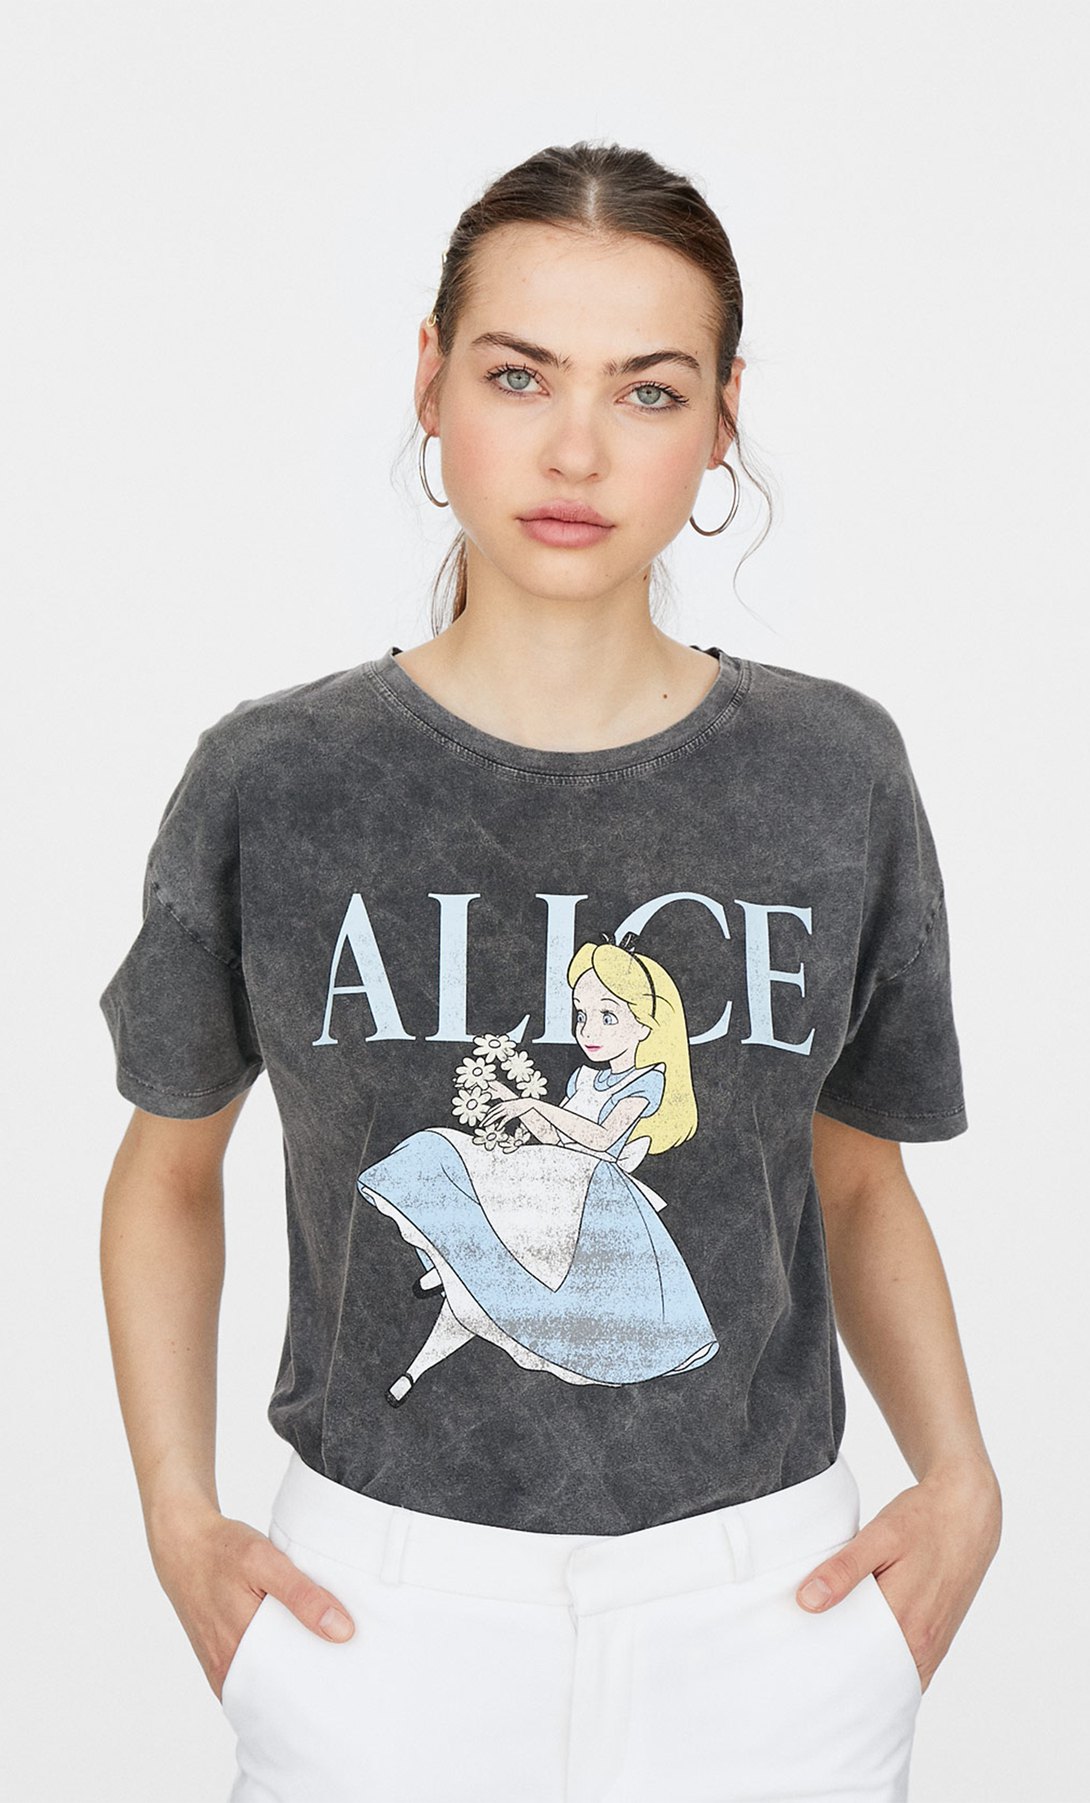 Falling Alice im Wunderland Grau Damen Oversize T-Shirt Gr.S-L 